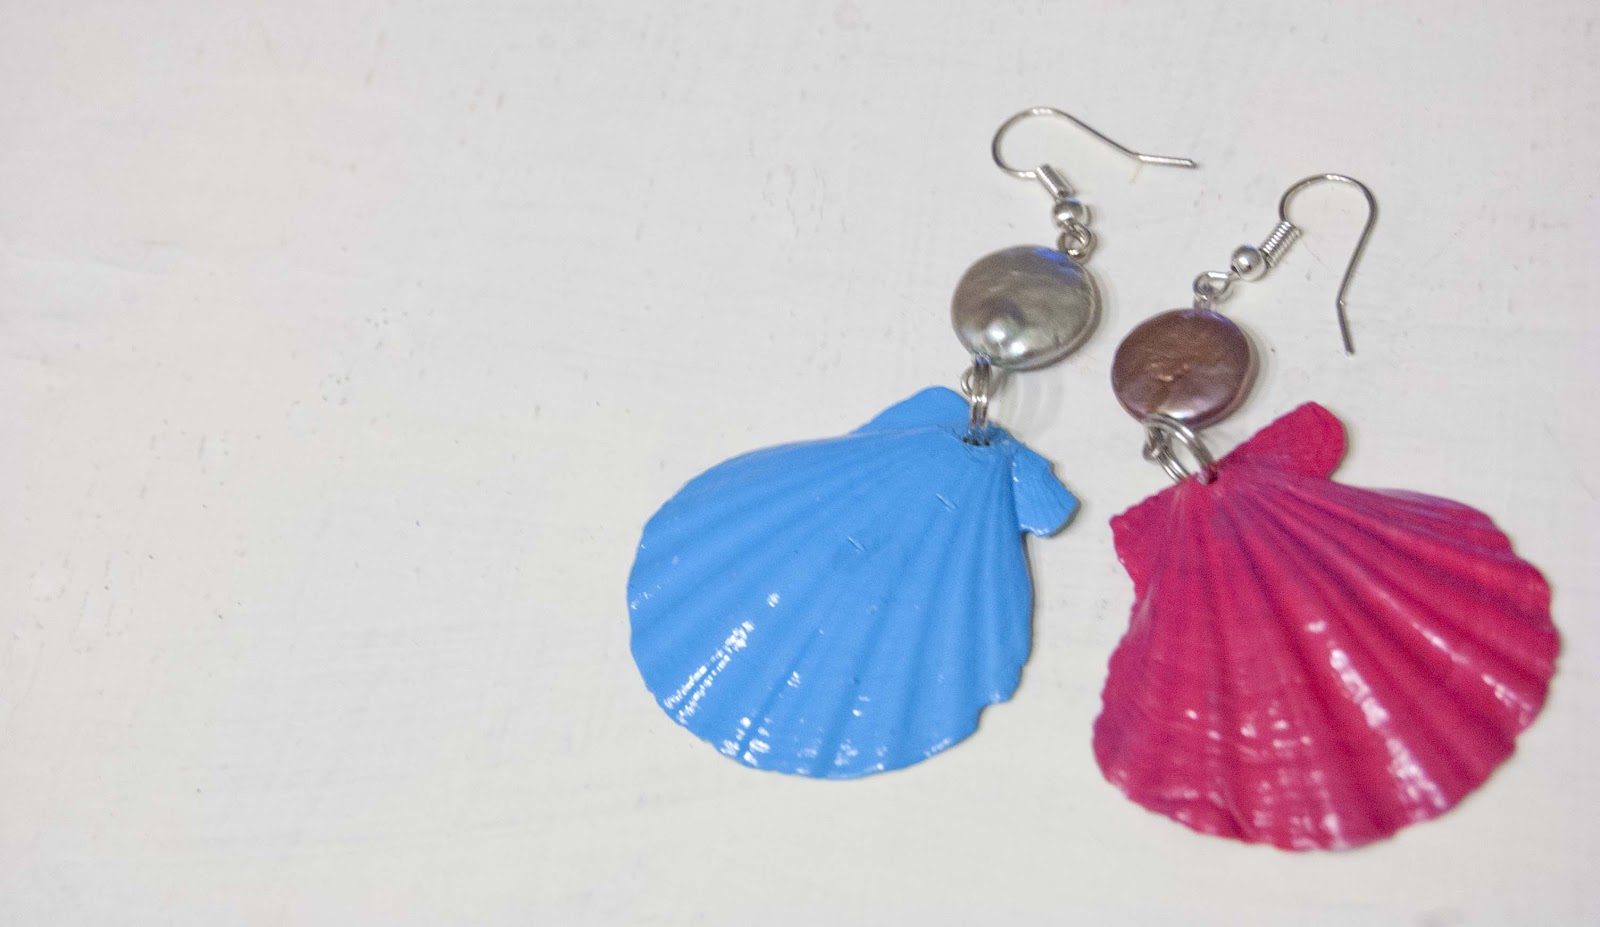 lovely idea!: Seashell earrings